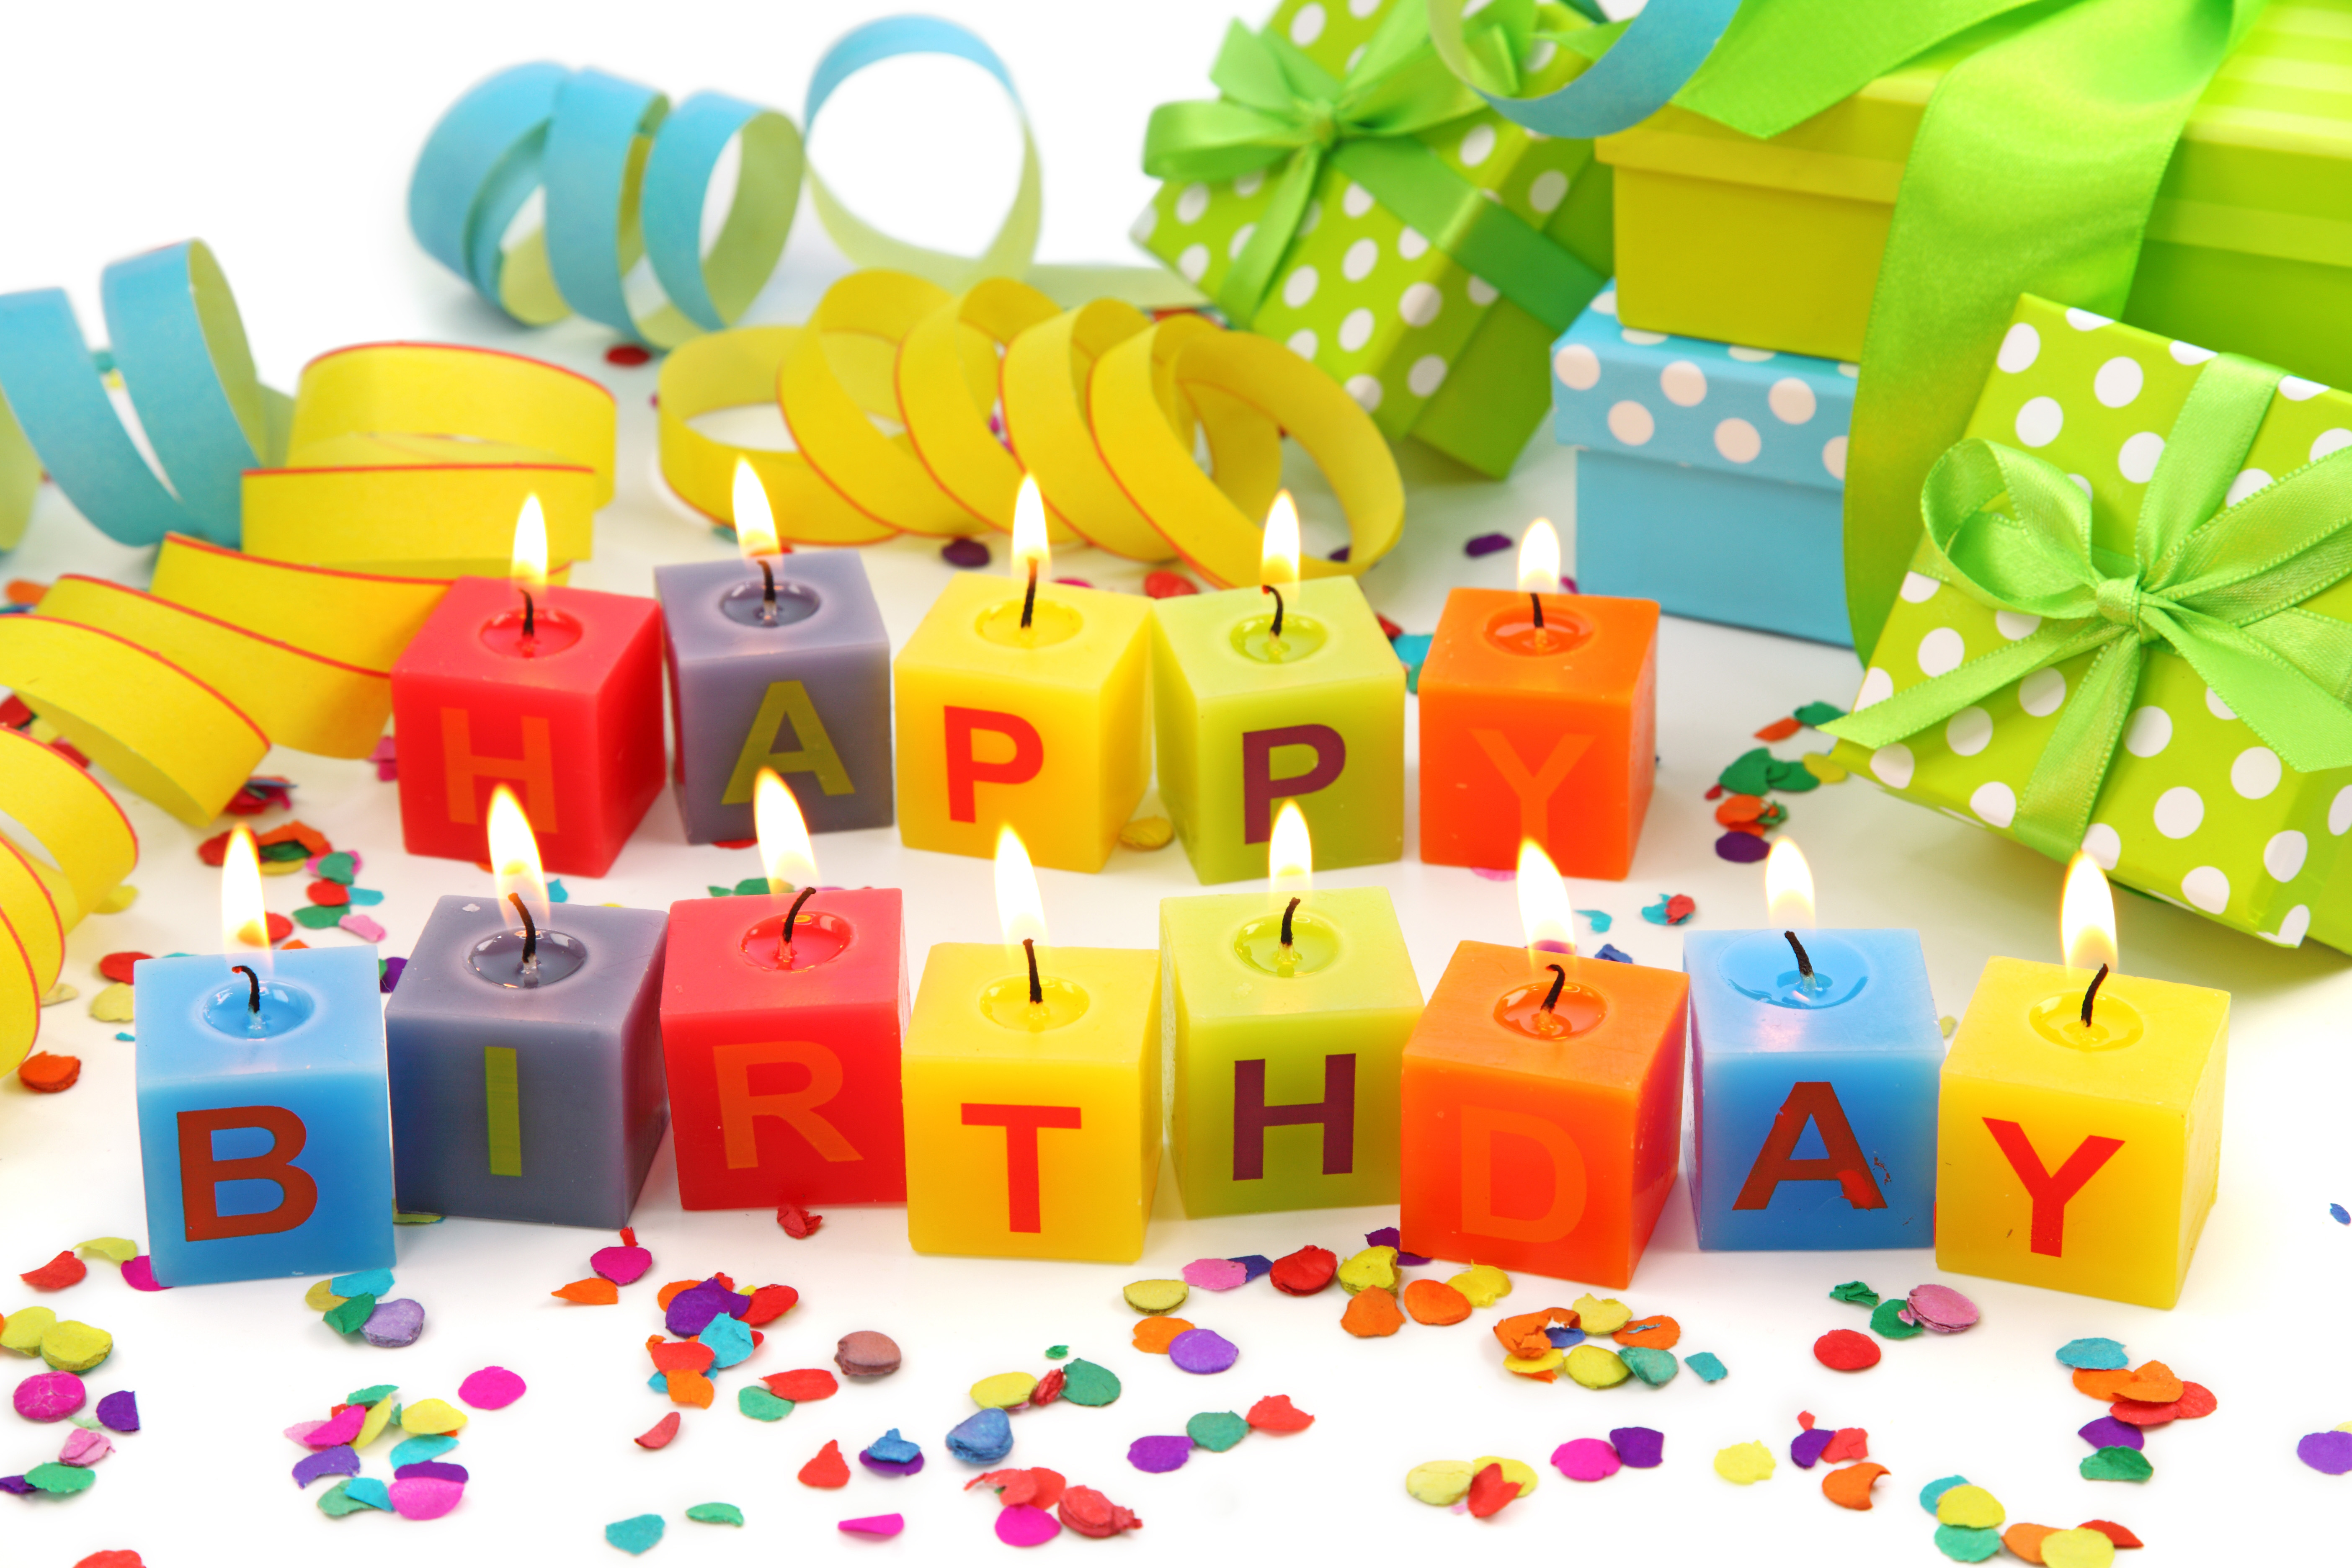 Happy Birthday Desktop Wallpaper Images amp Pictures   Becuo